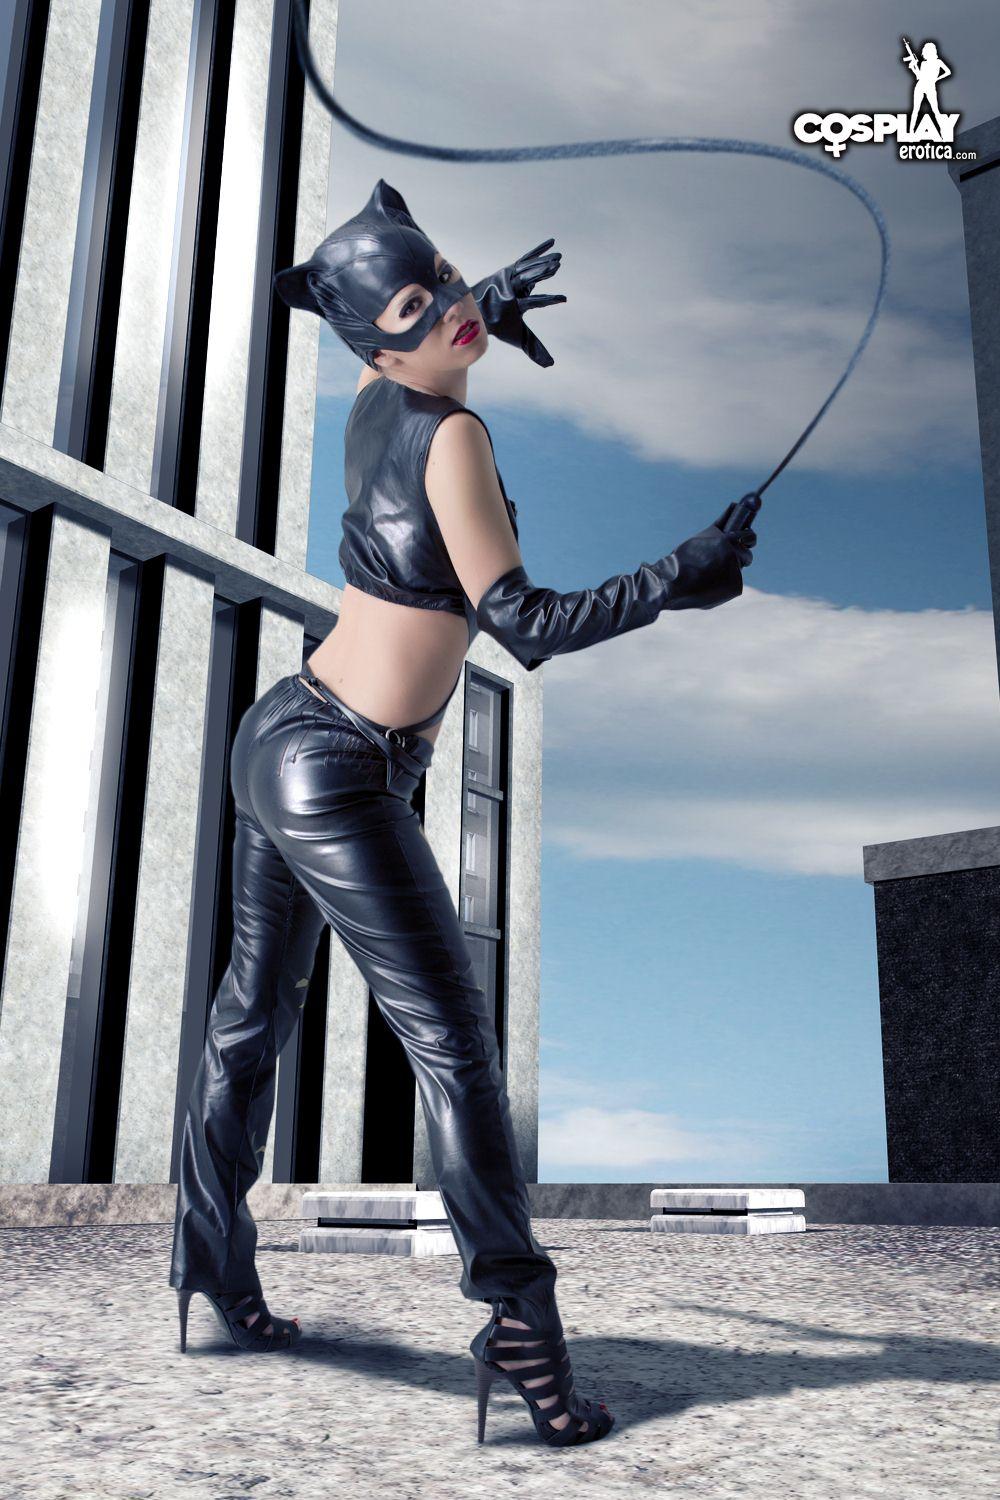 Sexy cosplayer cassie si veste come catwoman
 #53704150